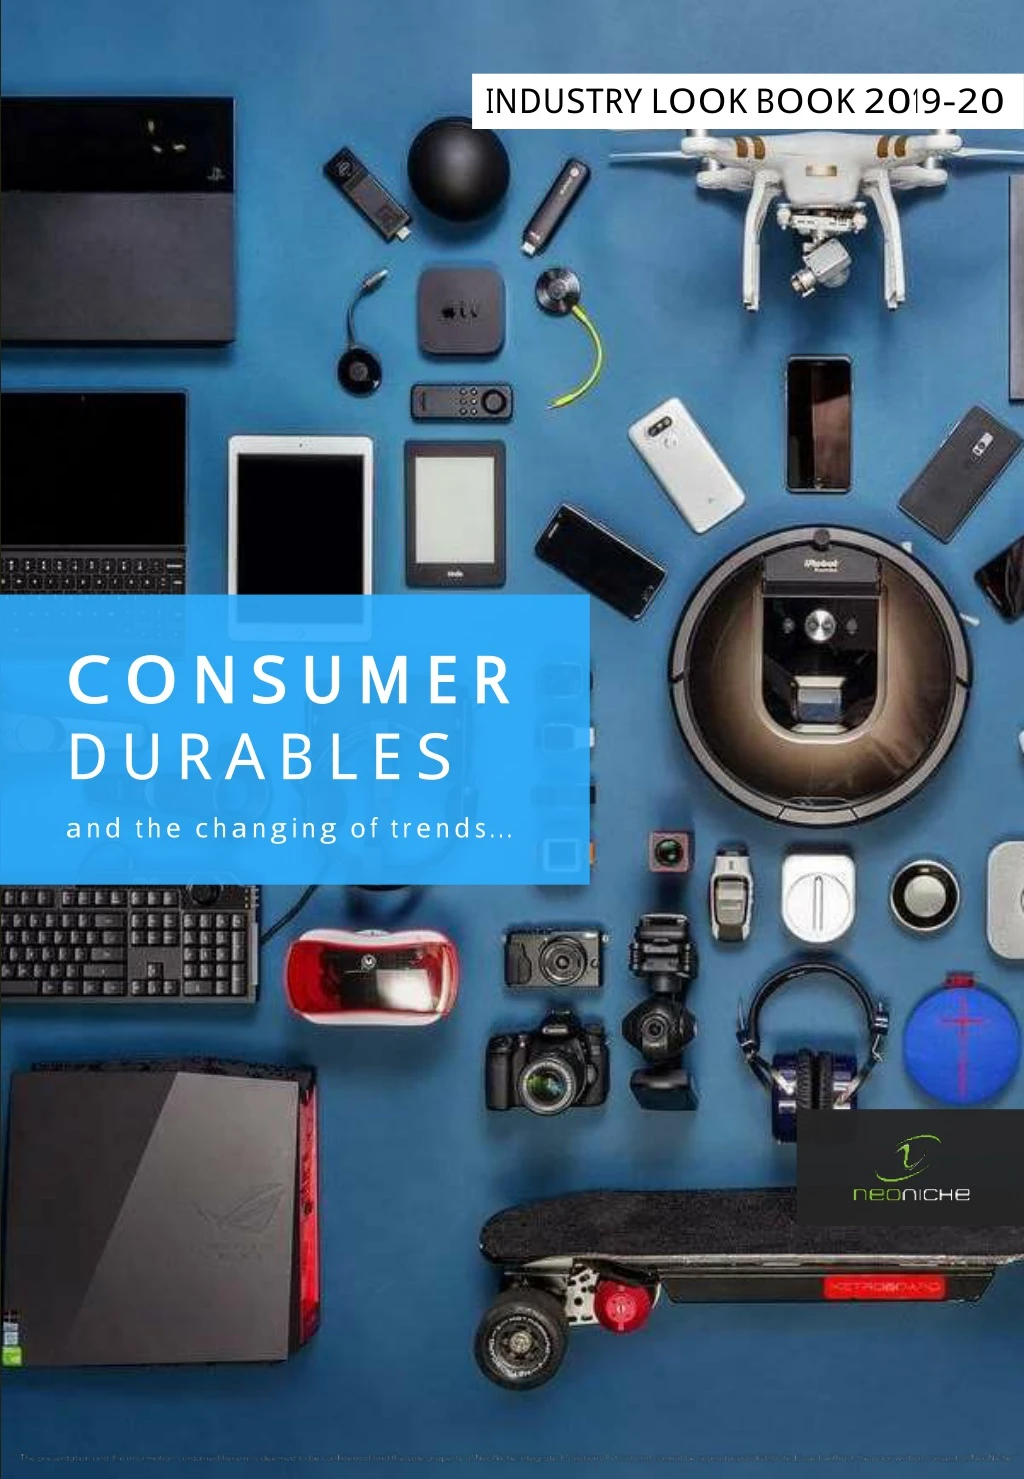 consumer durables industry look book 20 1 9 20